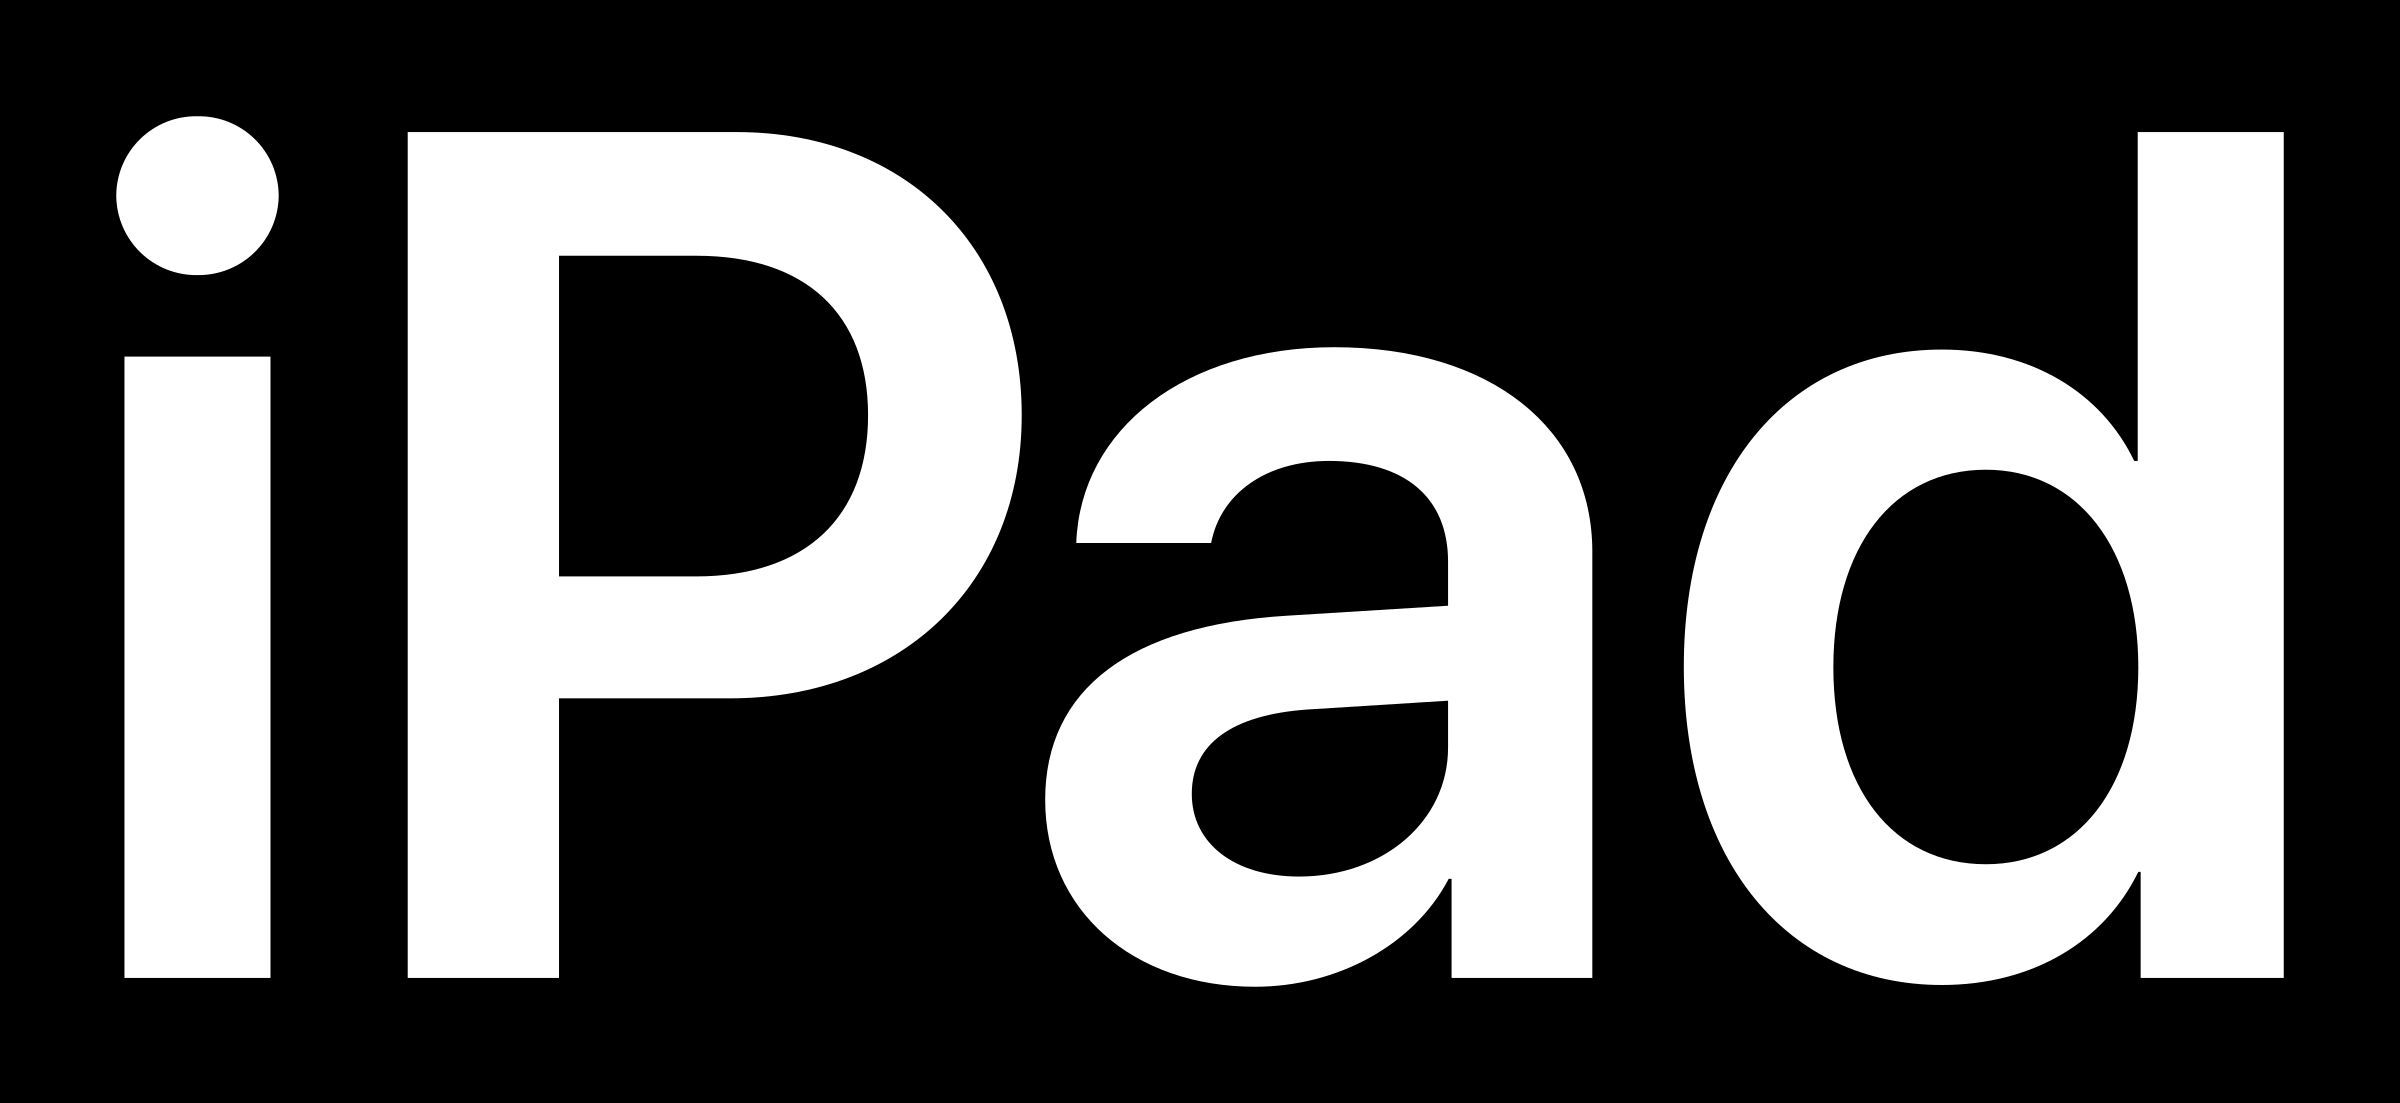 iPad Logo - iPad Logo PNG Transparent & SVG Vector - Freebie Supply